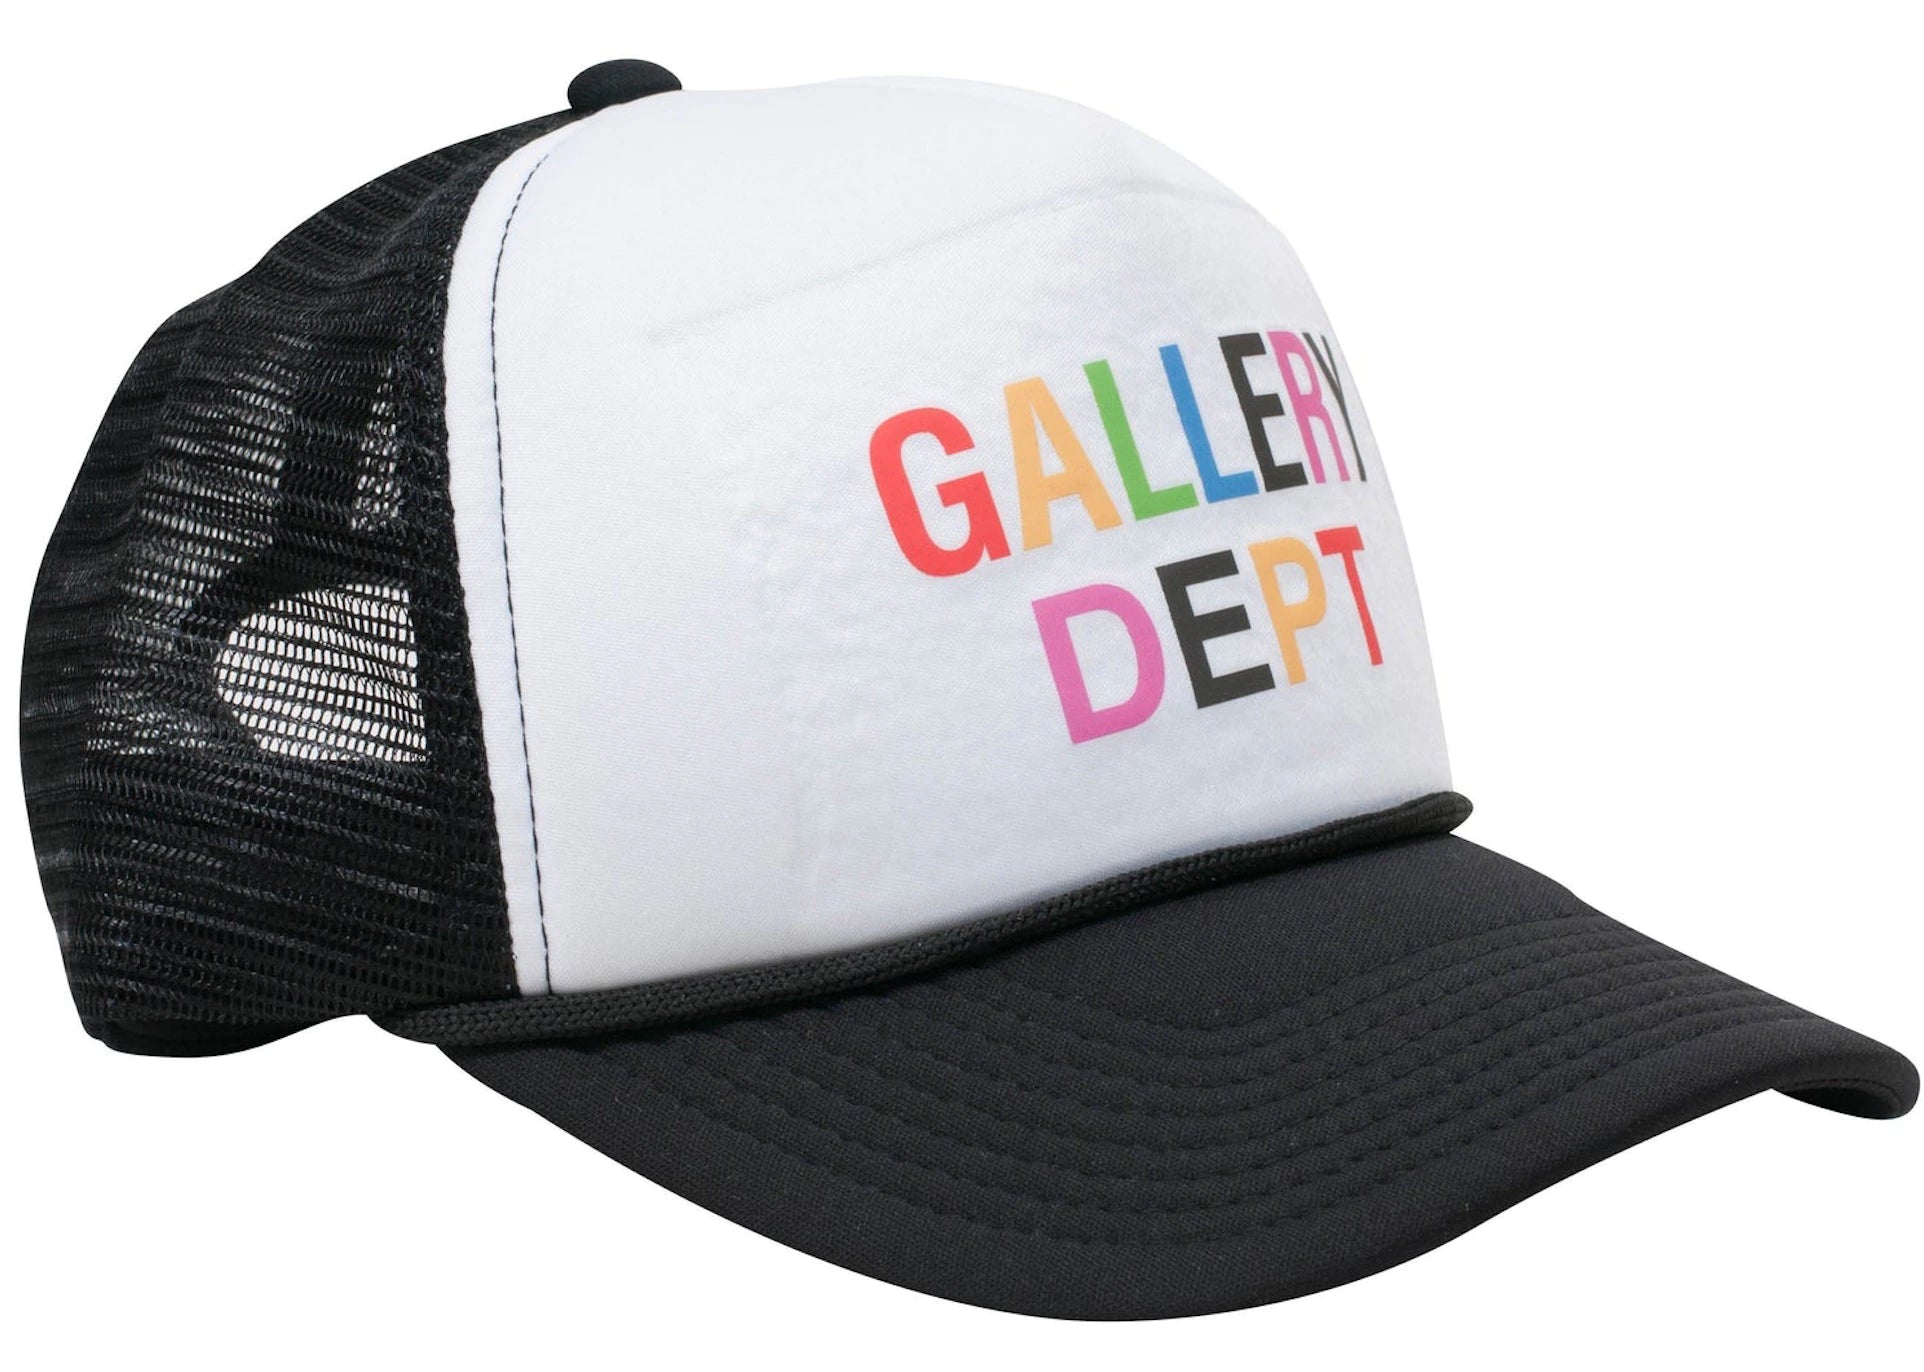 Gallery Dept. Beverly Hills Trucker Hat Black/White